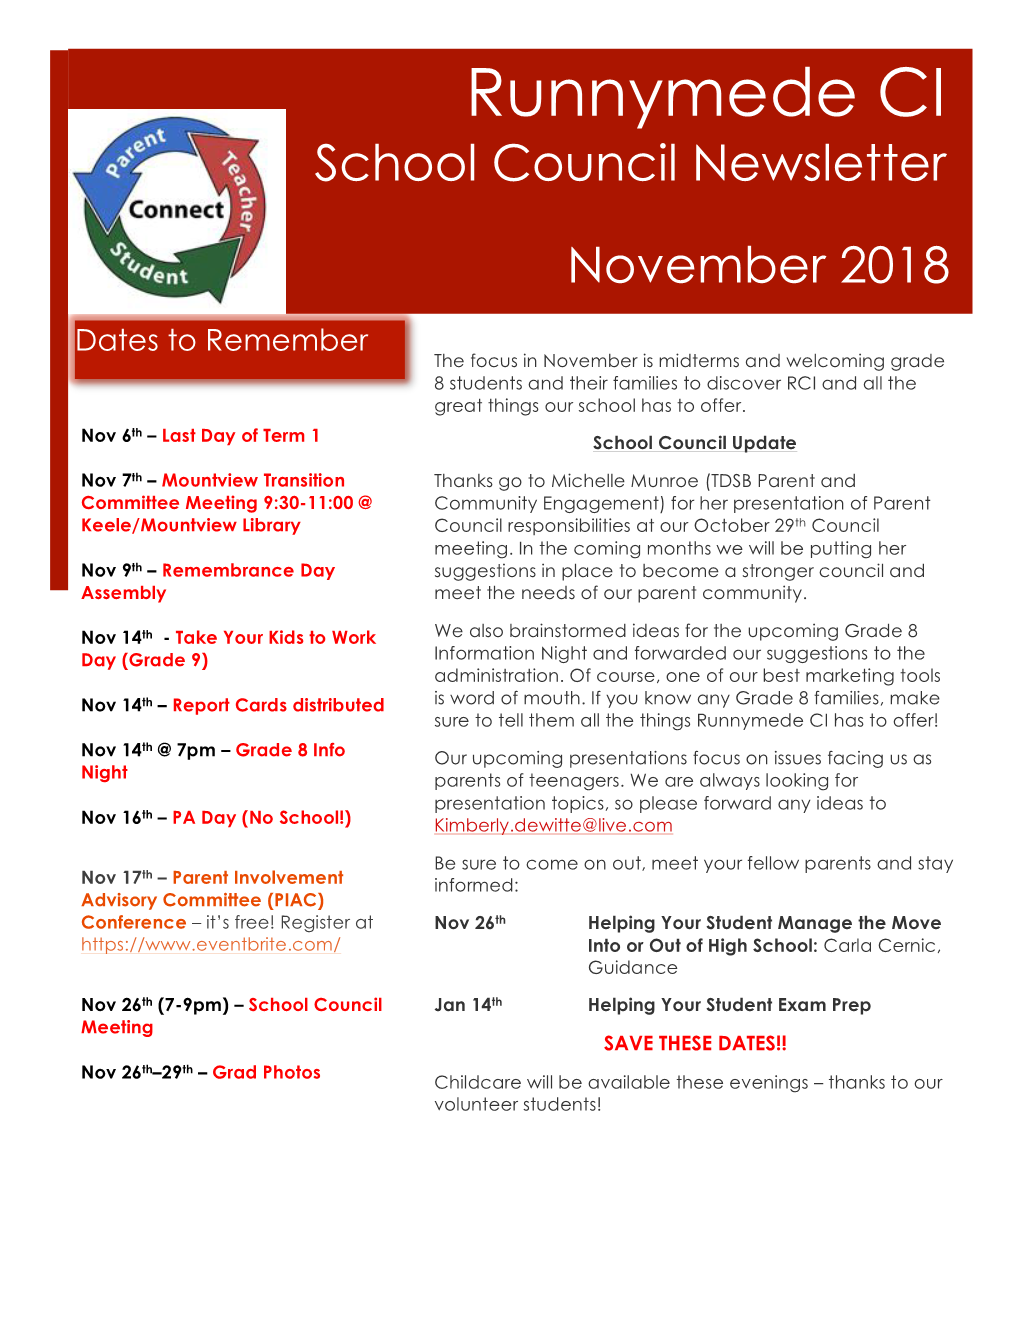 Runnymede CI School Council Newsletter November 2018